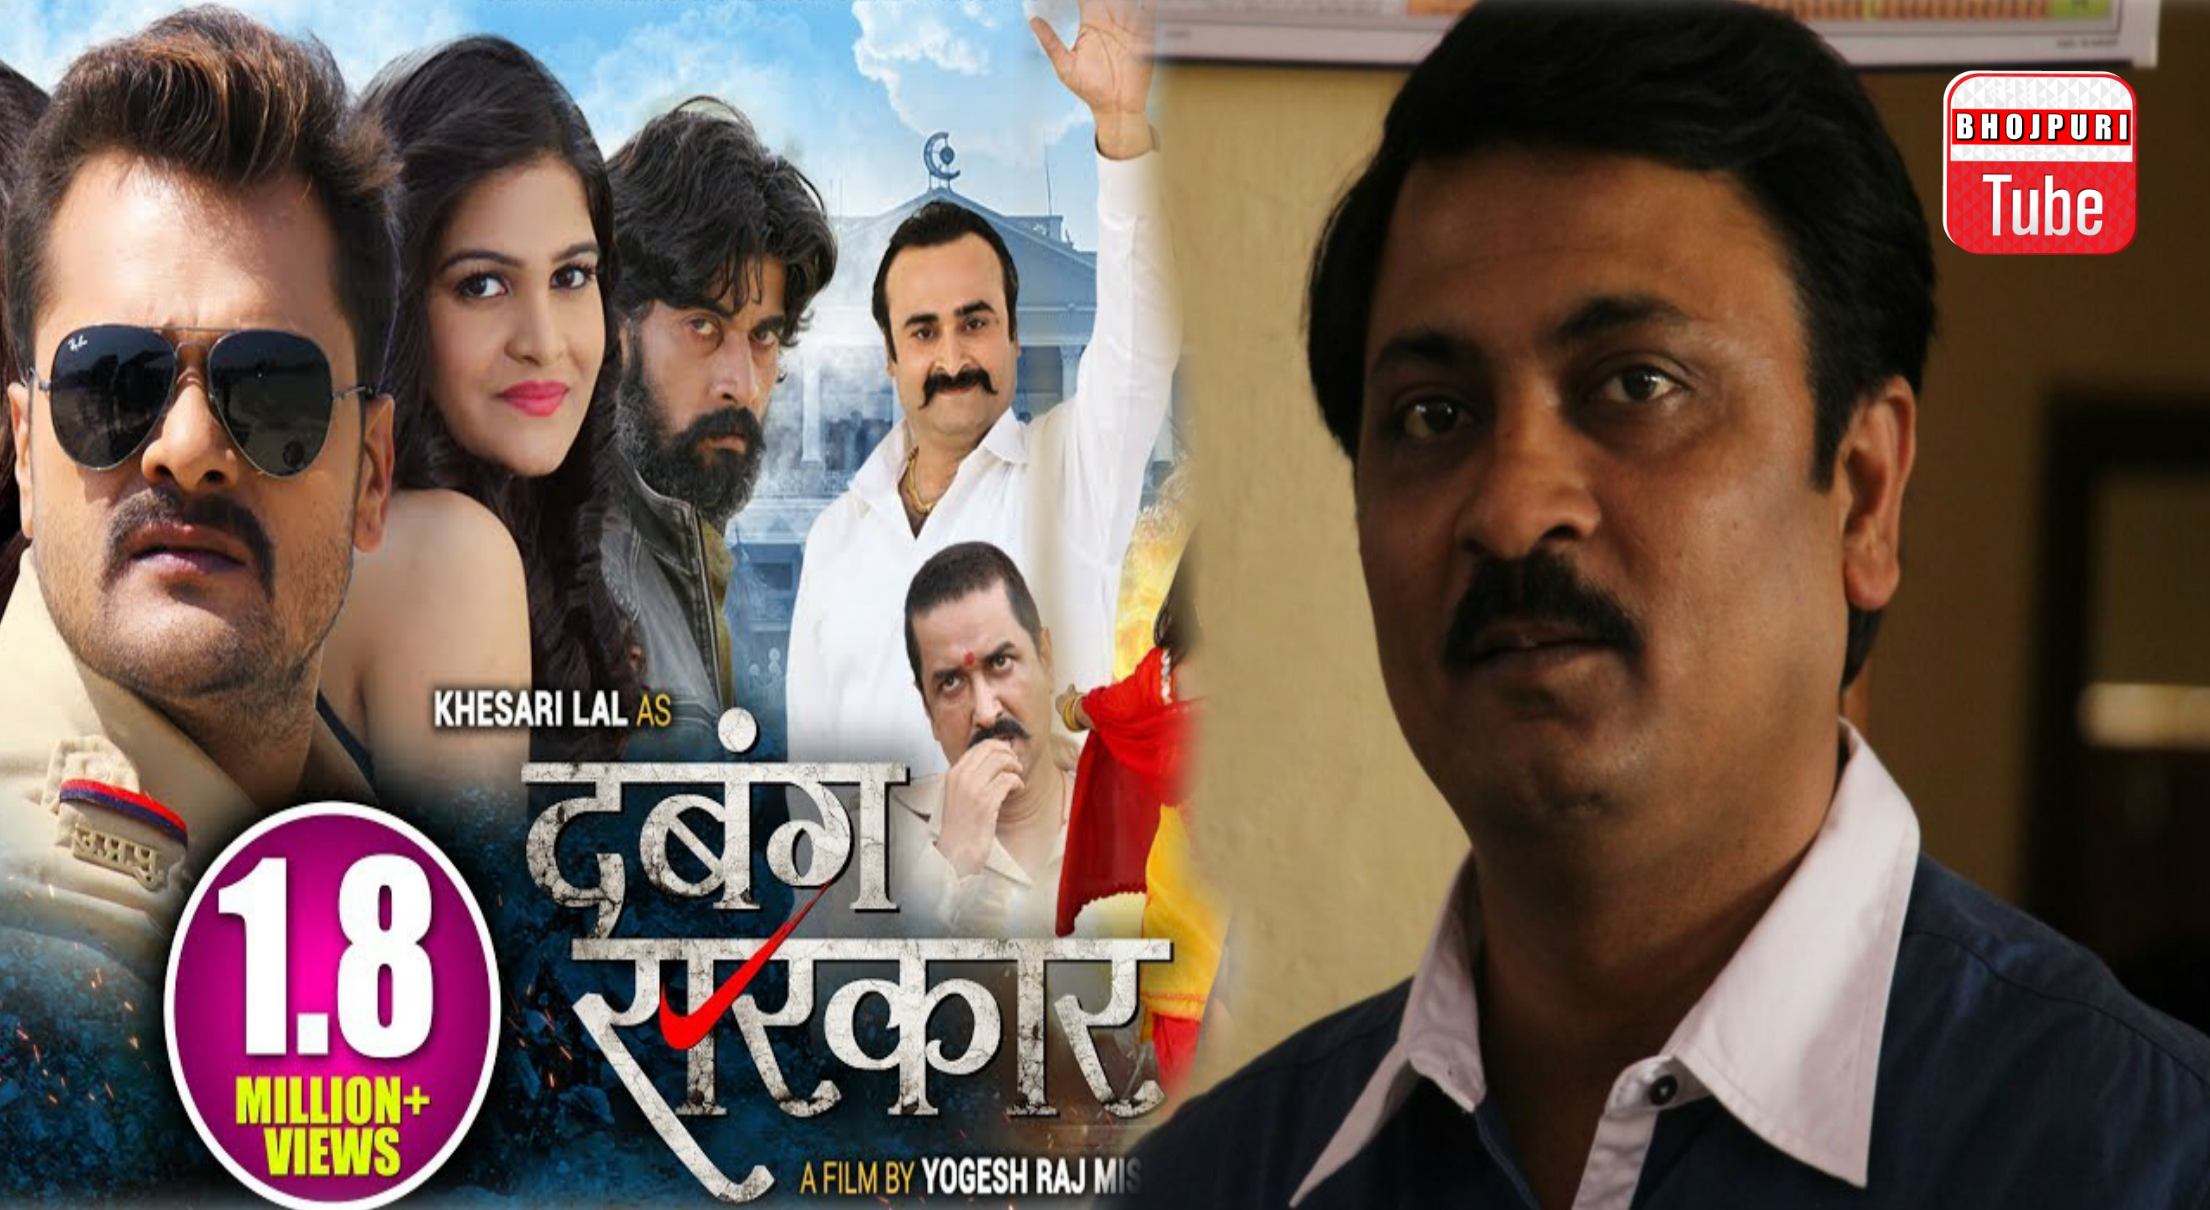 Producer Deepak Kumar's film 'Dabang Sarkar' will be released this Dussehra